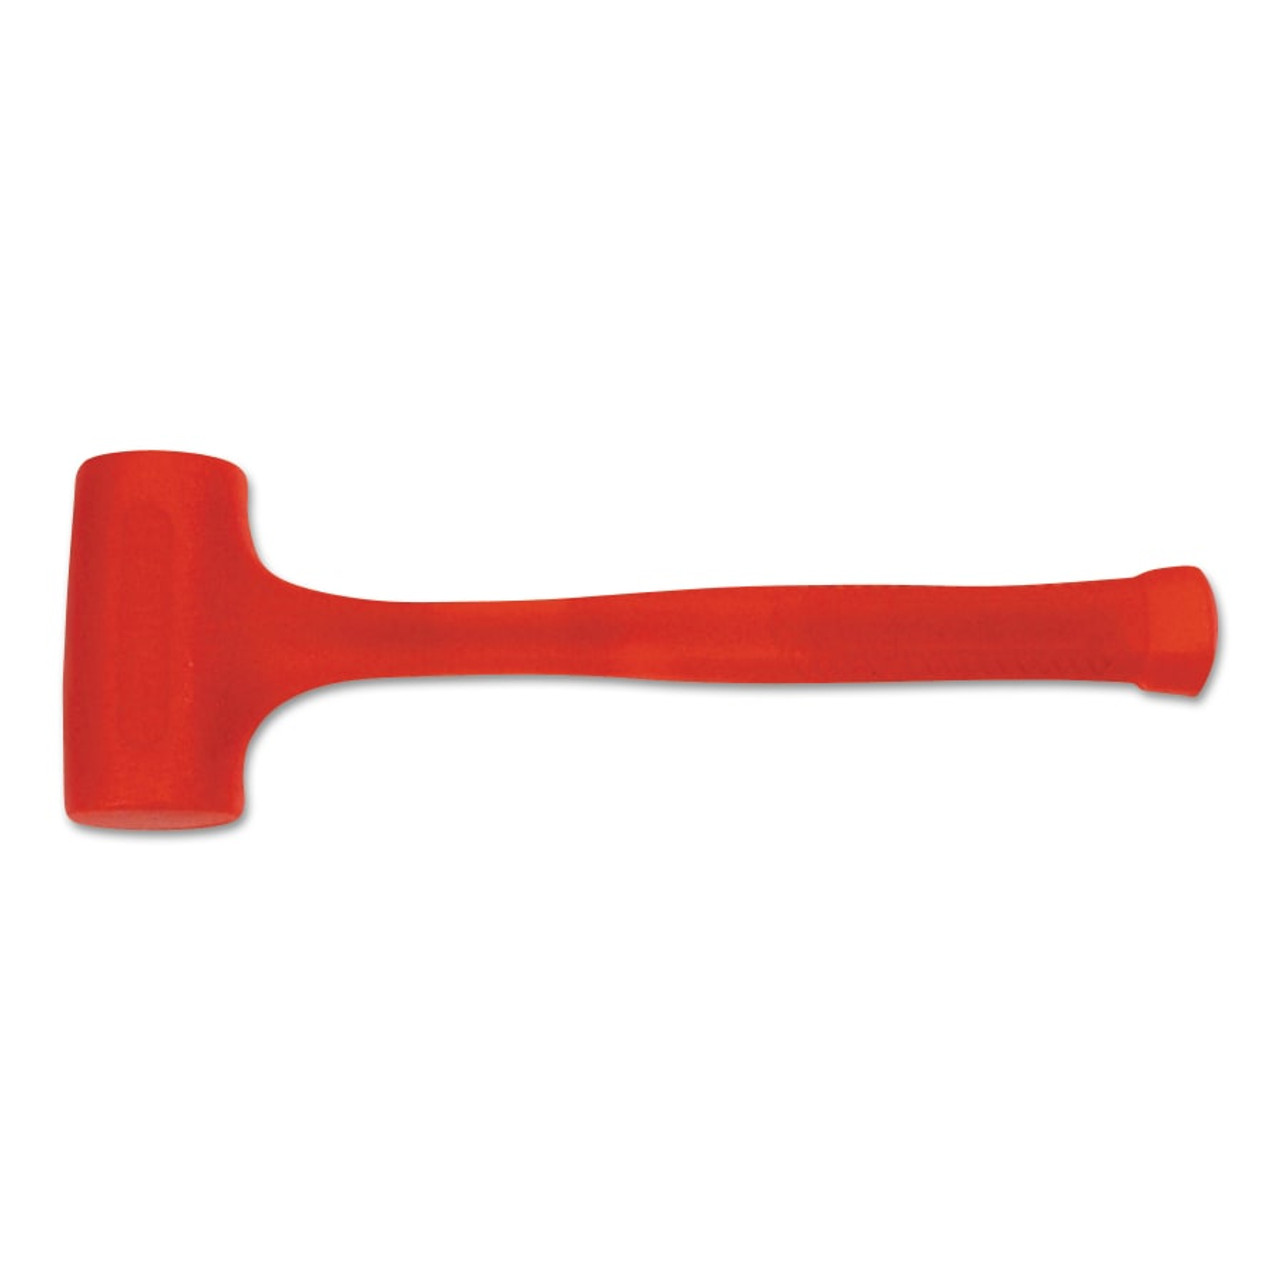 Soft Face Hammer, 21 oz Head, 1.8 in Diameter, Orange (57-532)